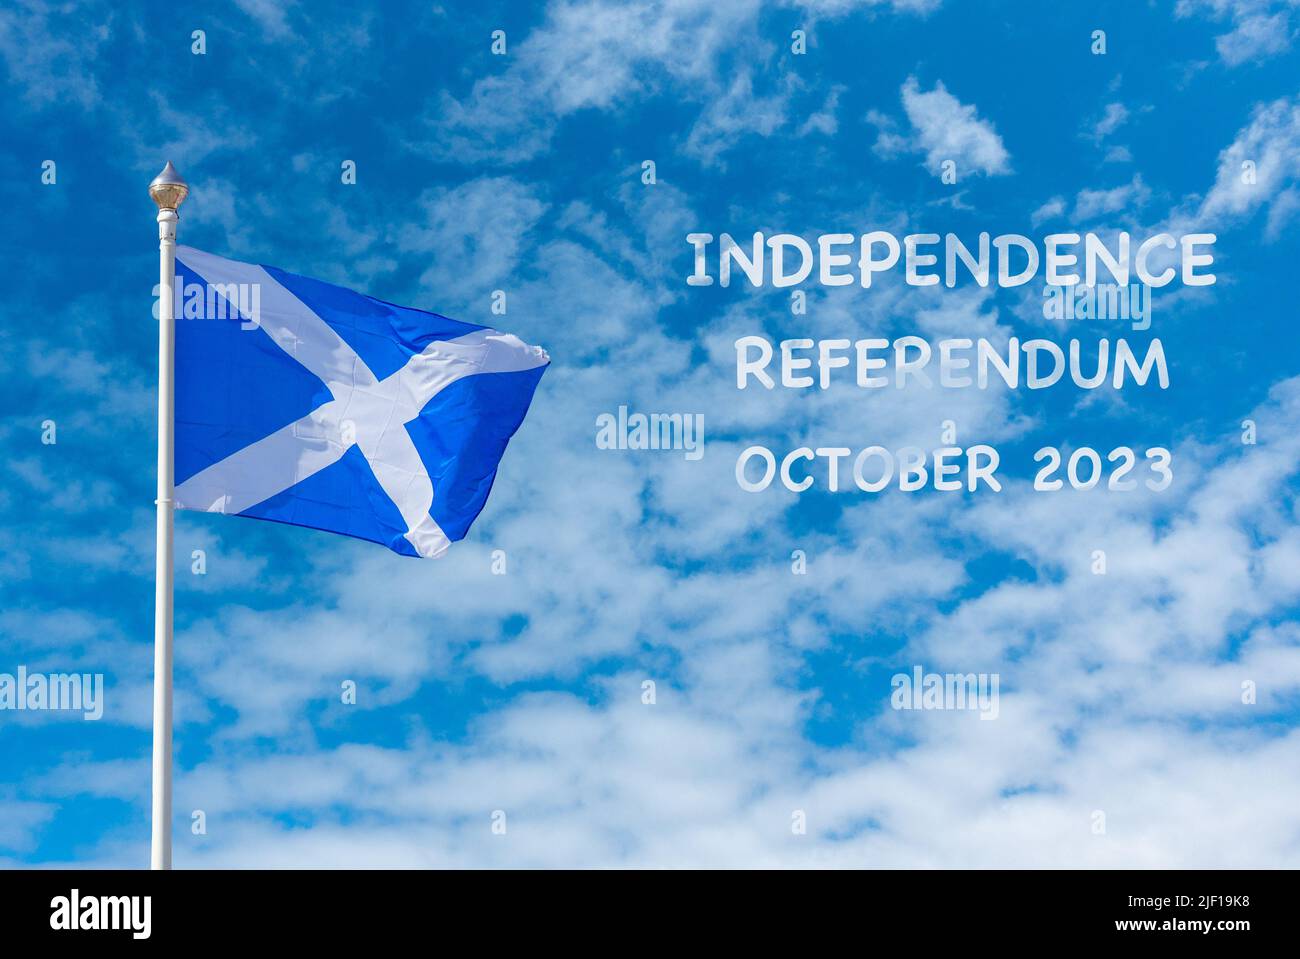 Scotland, Scottish referendum, independence October 2023 concept Stock Photo